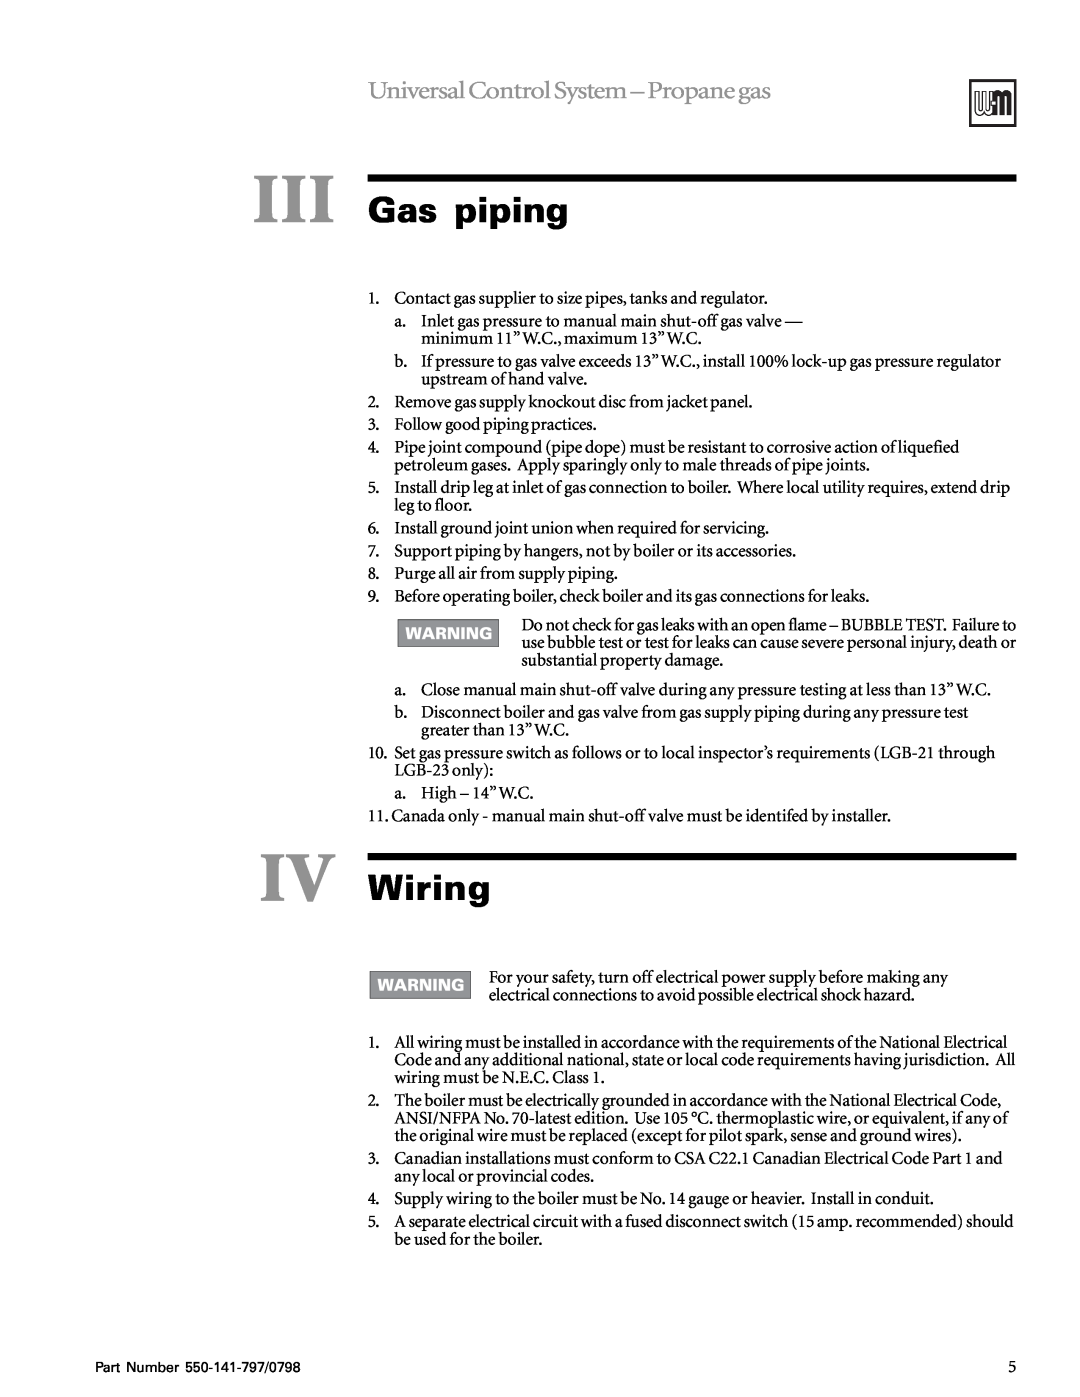 Weil-McLain LGB-15, LGB-7, LGB-14, LGB-8, LGB-20, LGB-13 III Gas piping, IV Wiring, Universal Control System - Propane gas 